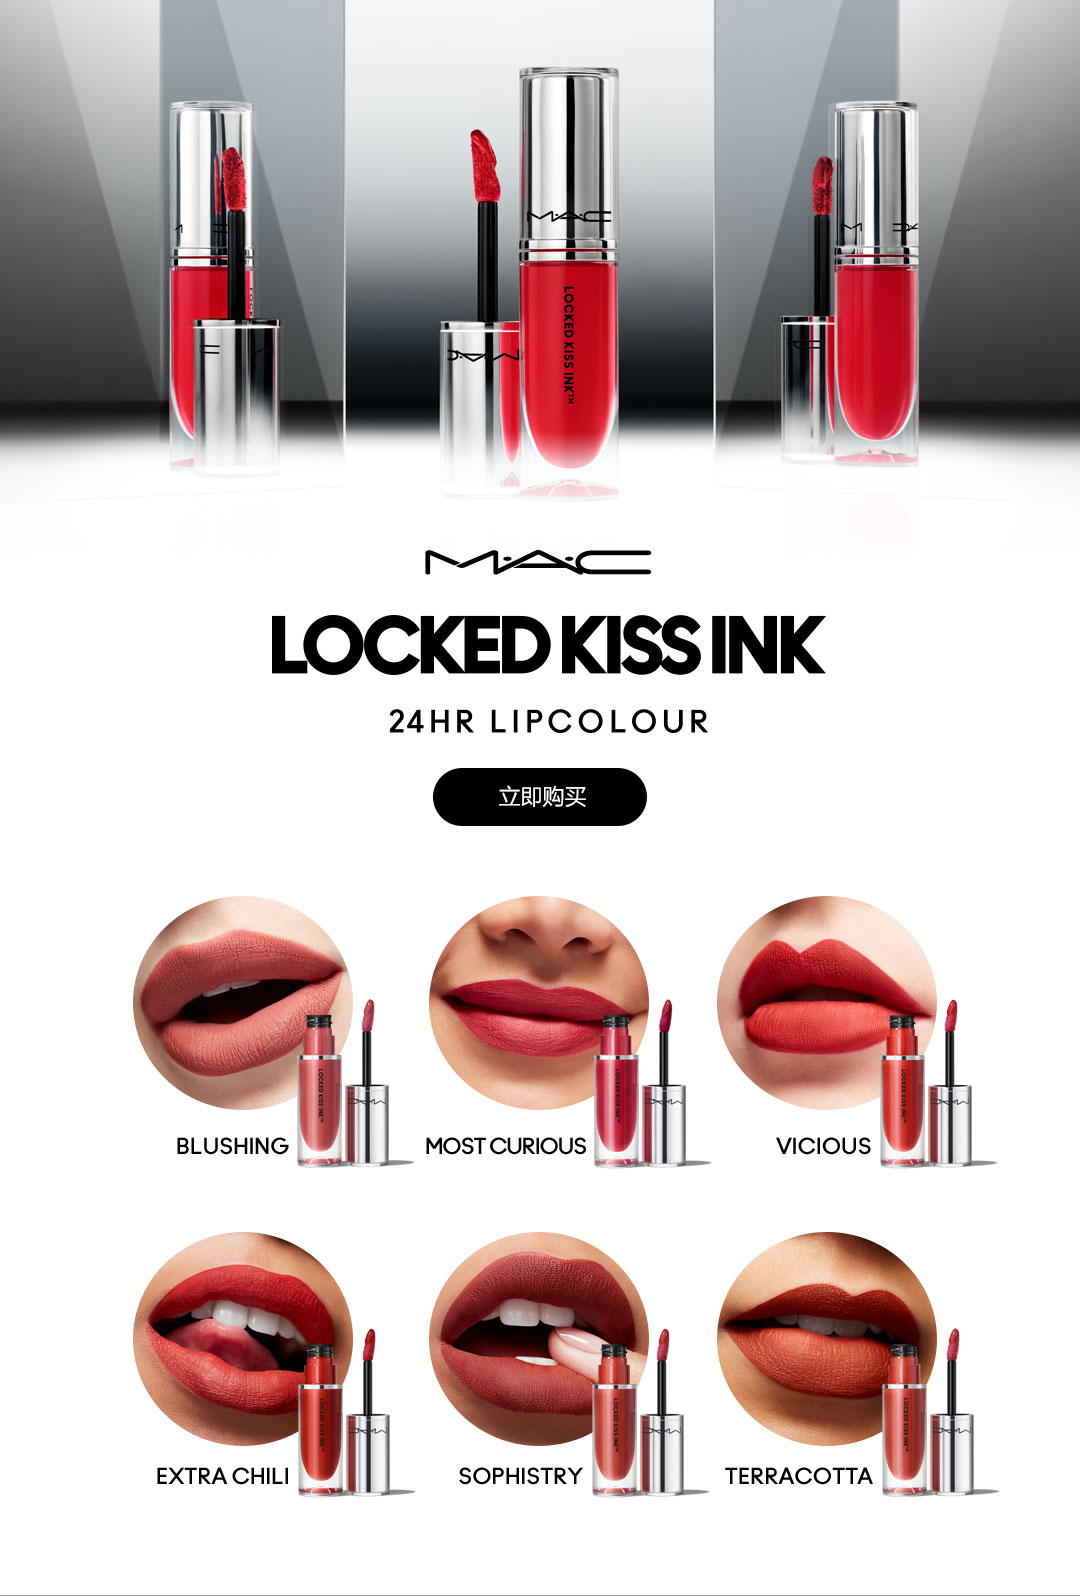 MAC LOCKED KISS INK 24HR LIPCOLOUR